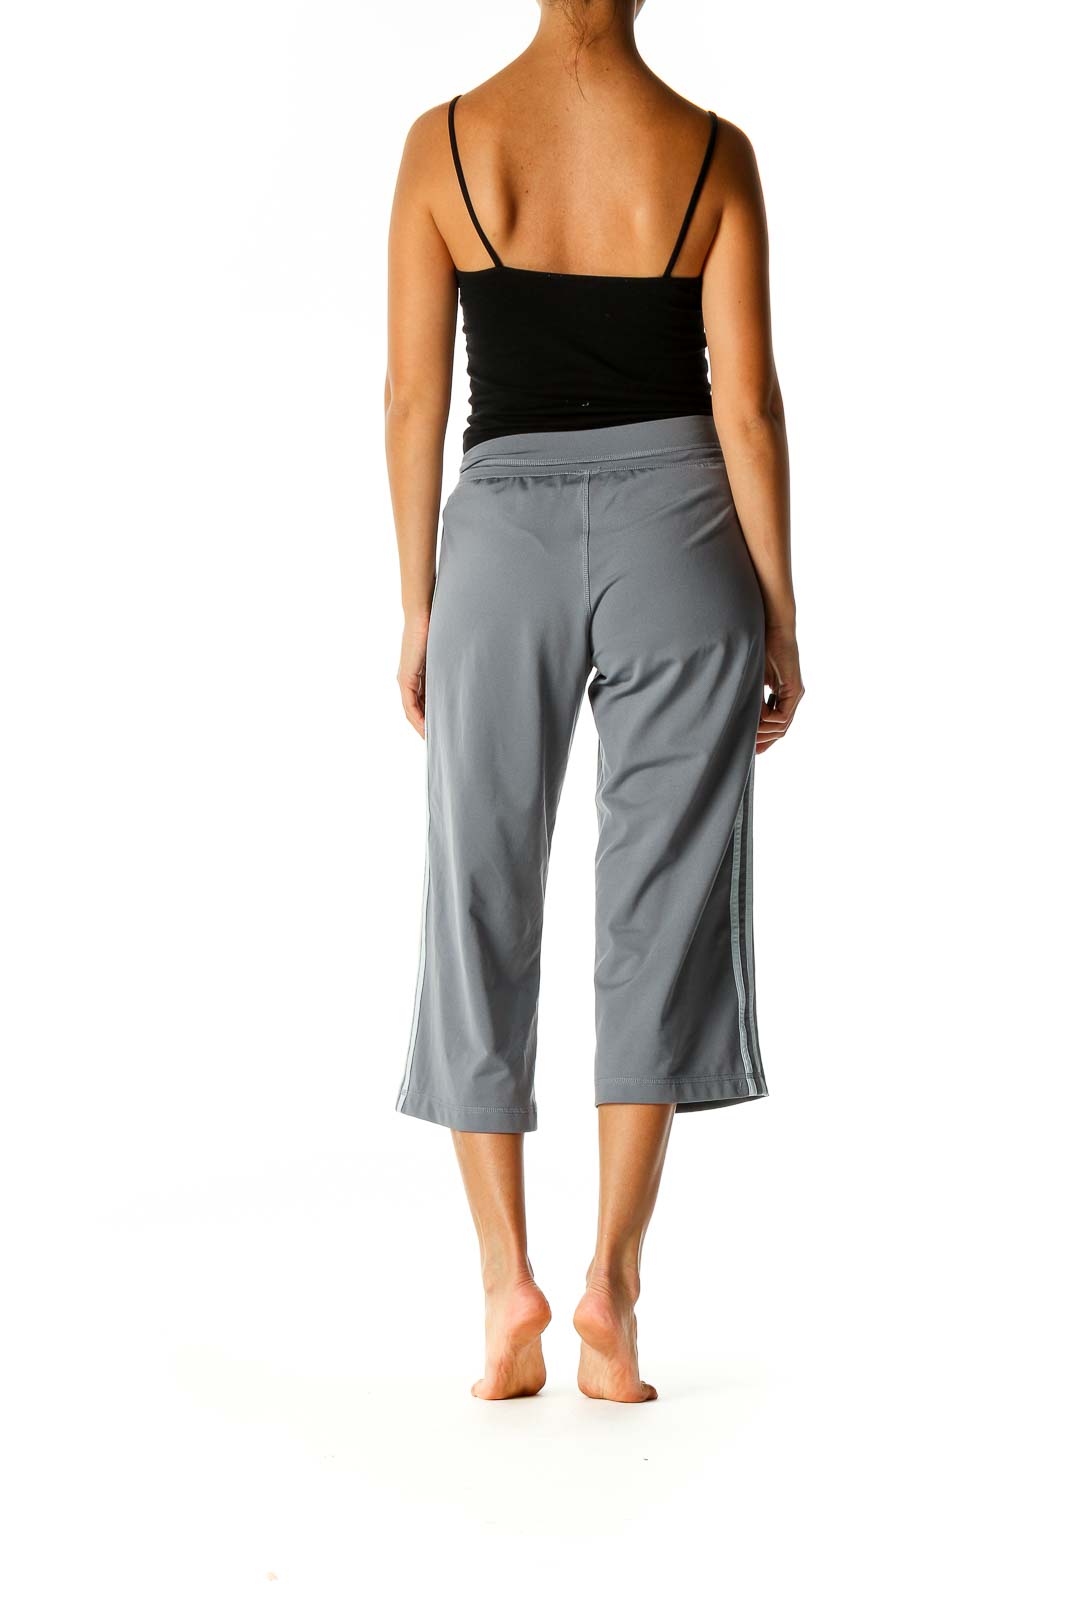 Adidas - Gray Solid Activewear Capri Pants Polyester Spandex Nylon